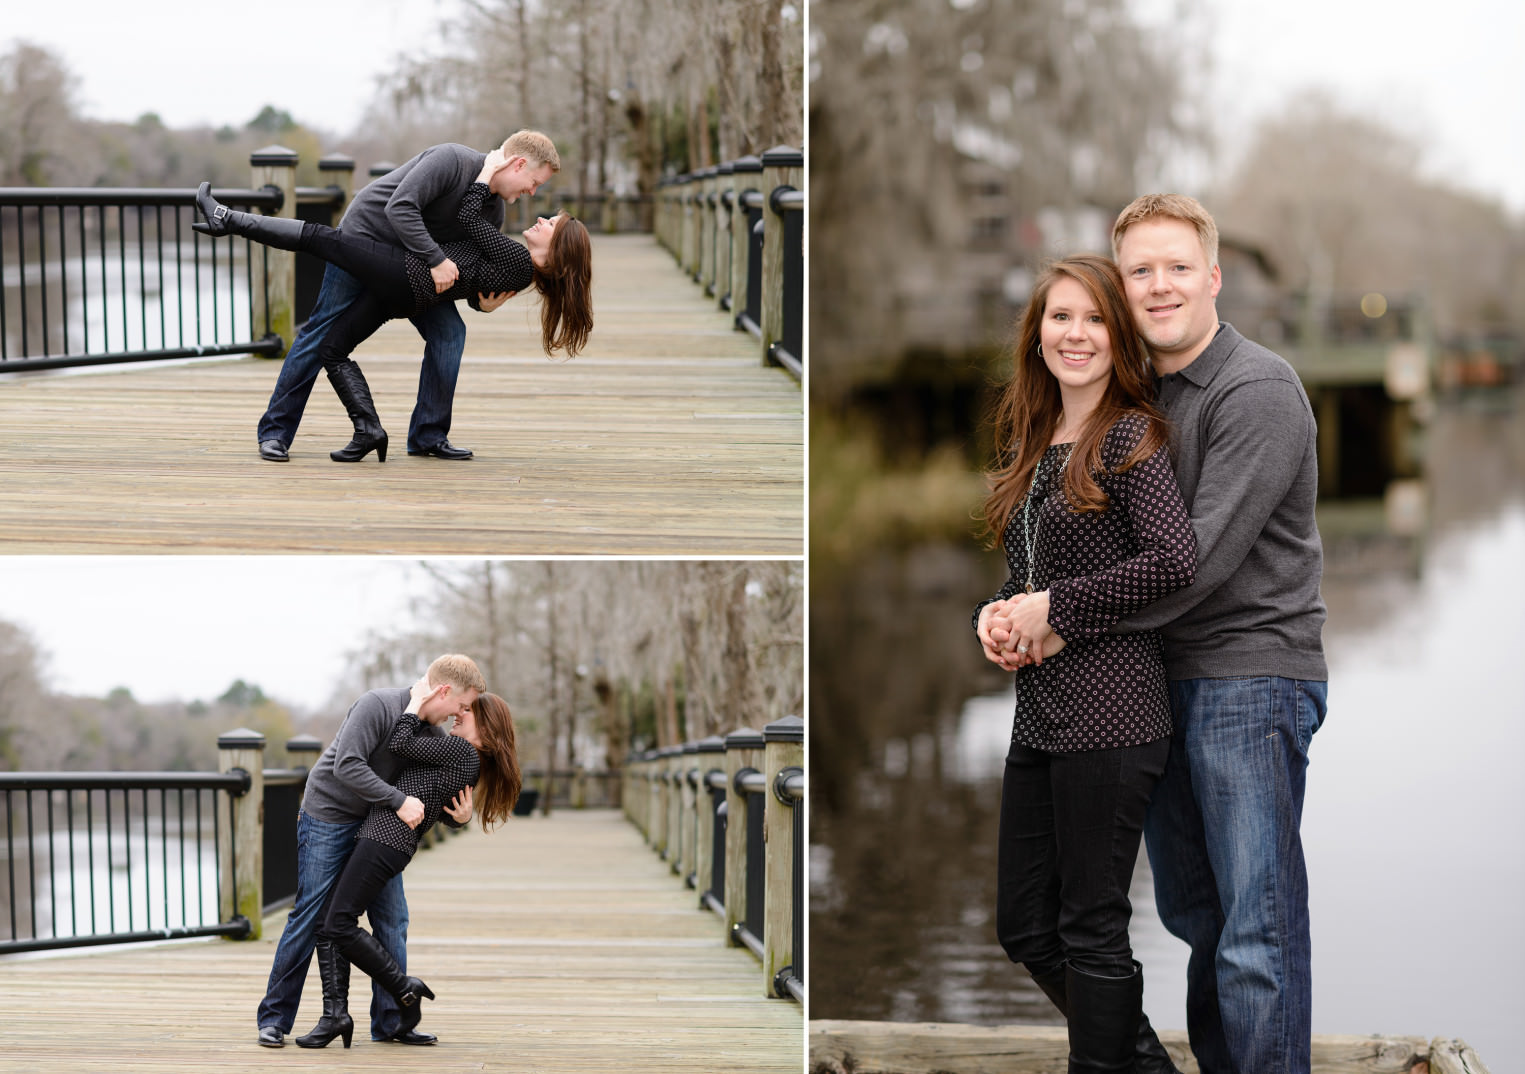 Guy leaning girl back for a kiss on the Riverwalk